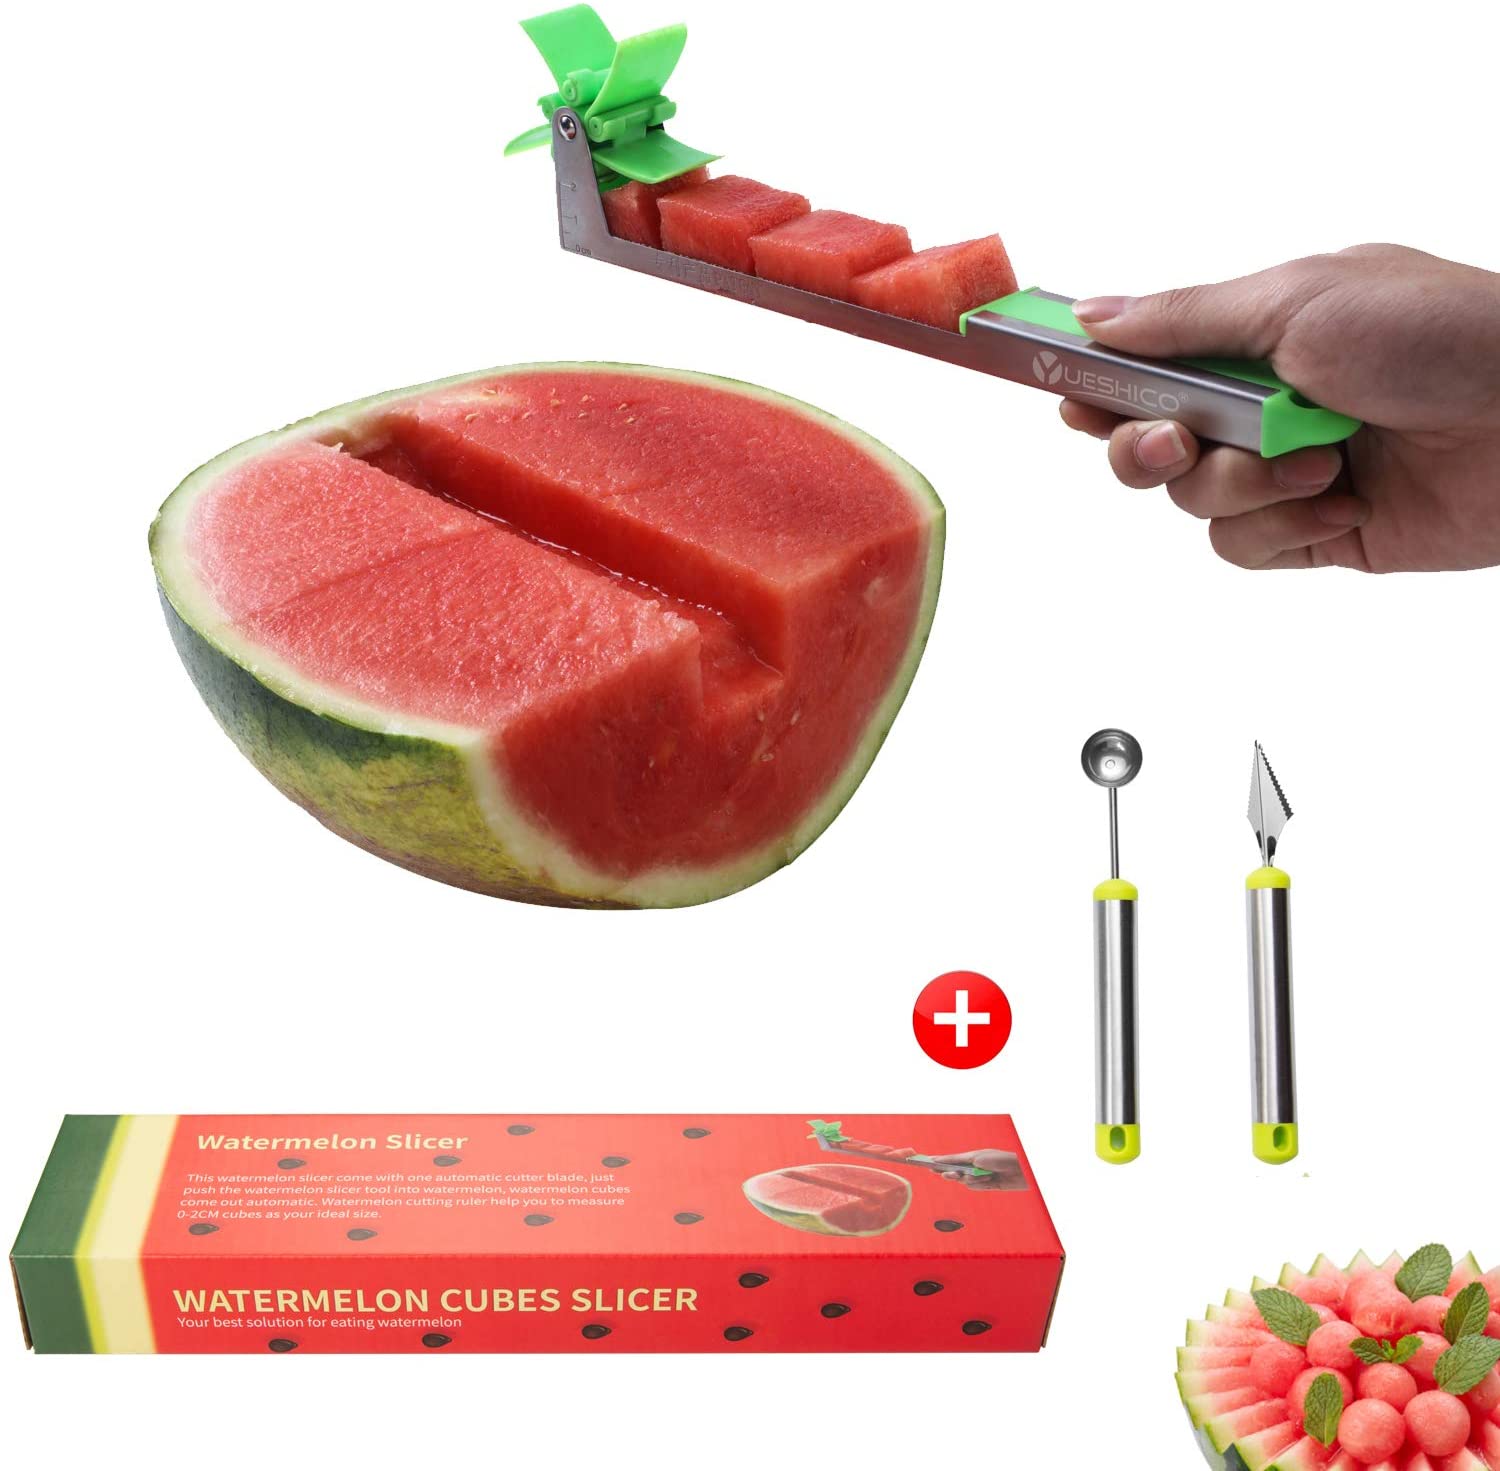 Spark Innovators Green SR-MC12 Right Melon Slicer 1 x 1.5 x 9 inches